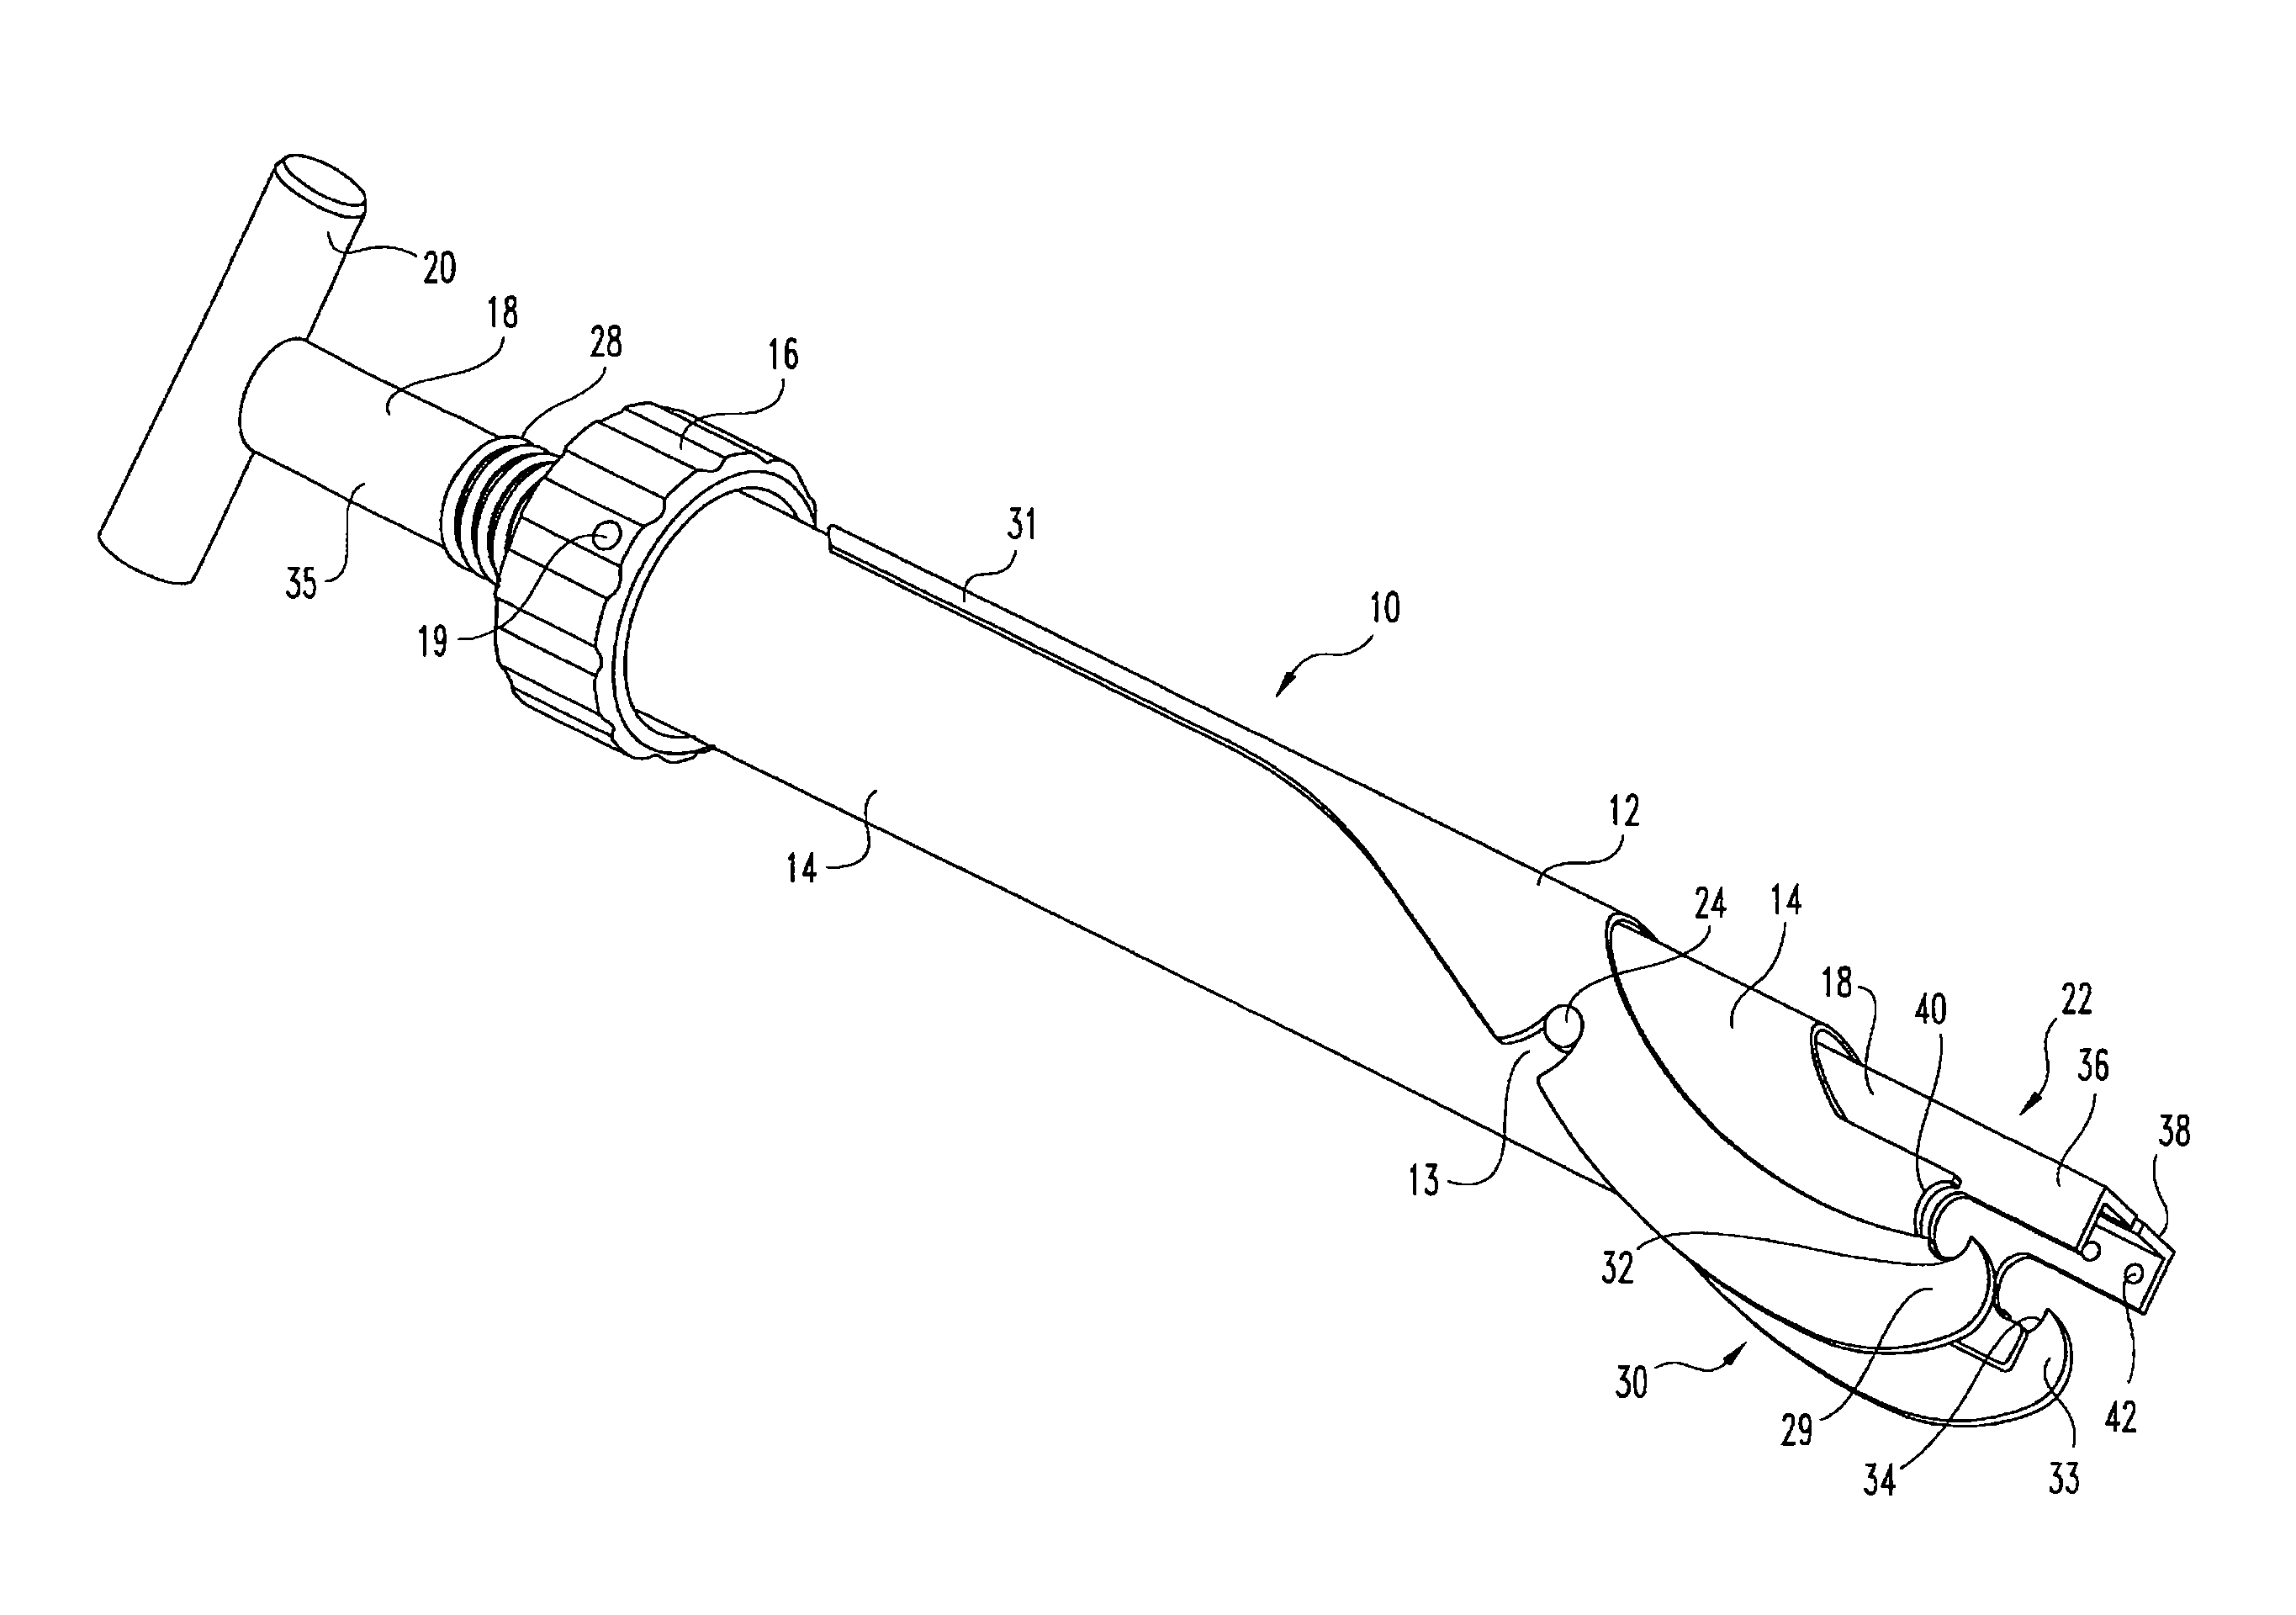 Rod introduction apparatus